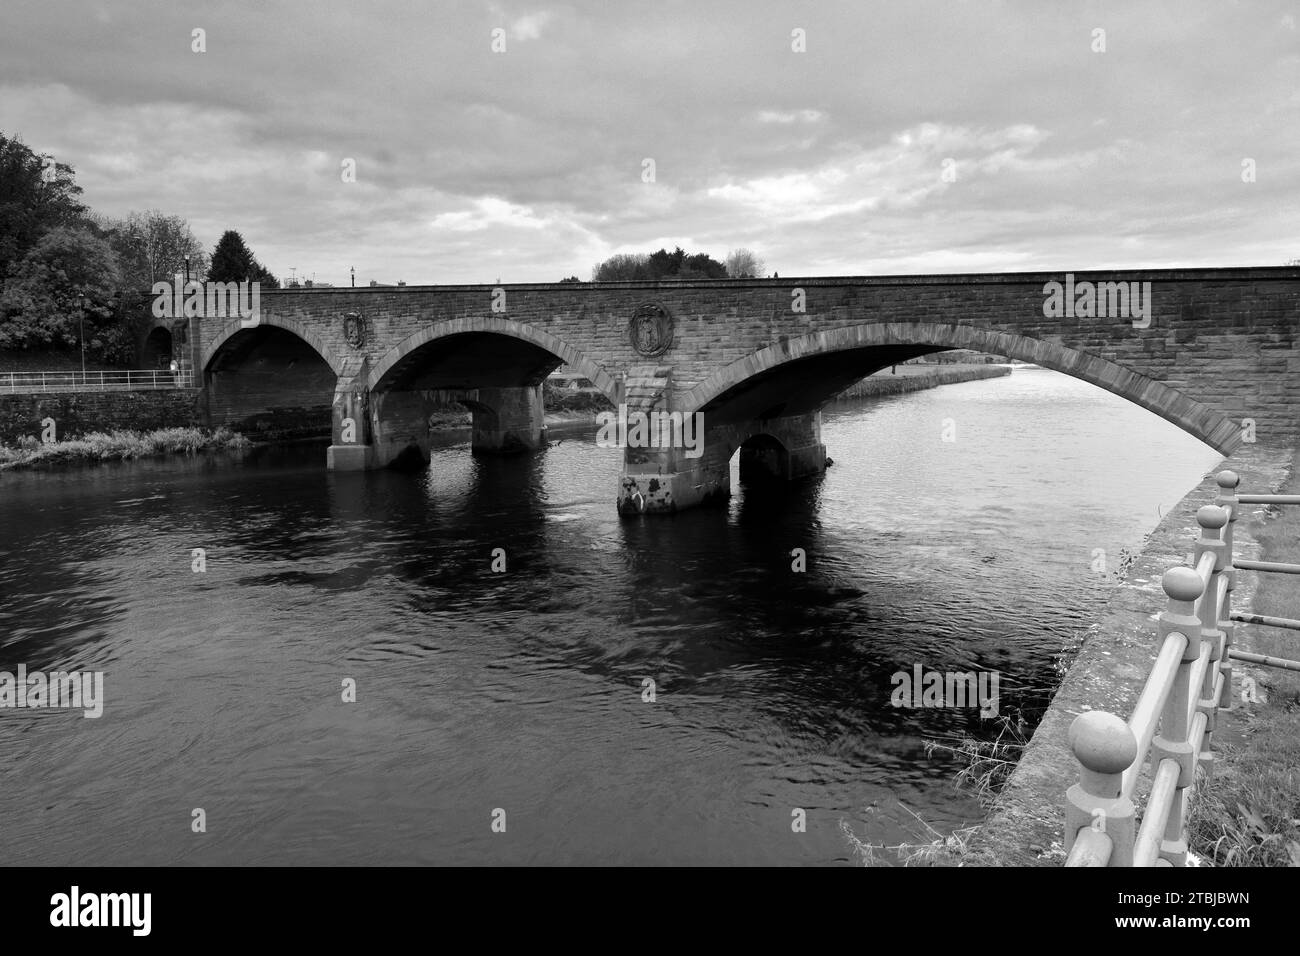 St Michael's Street Bridge, River Nith, Dumfries town, Dumfries and Galloway, Scotland, UK Stock Photo